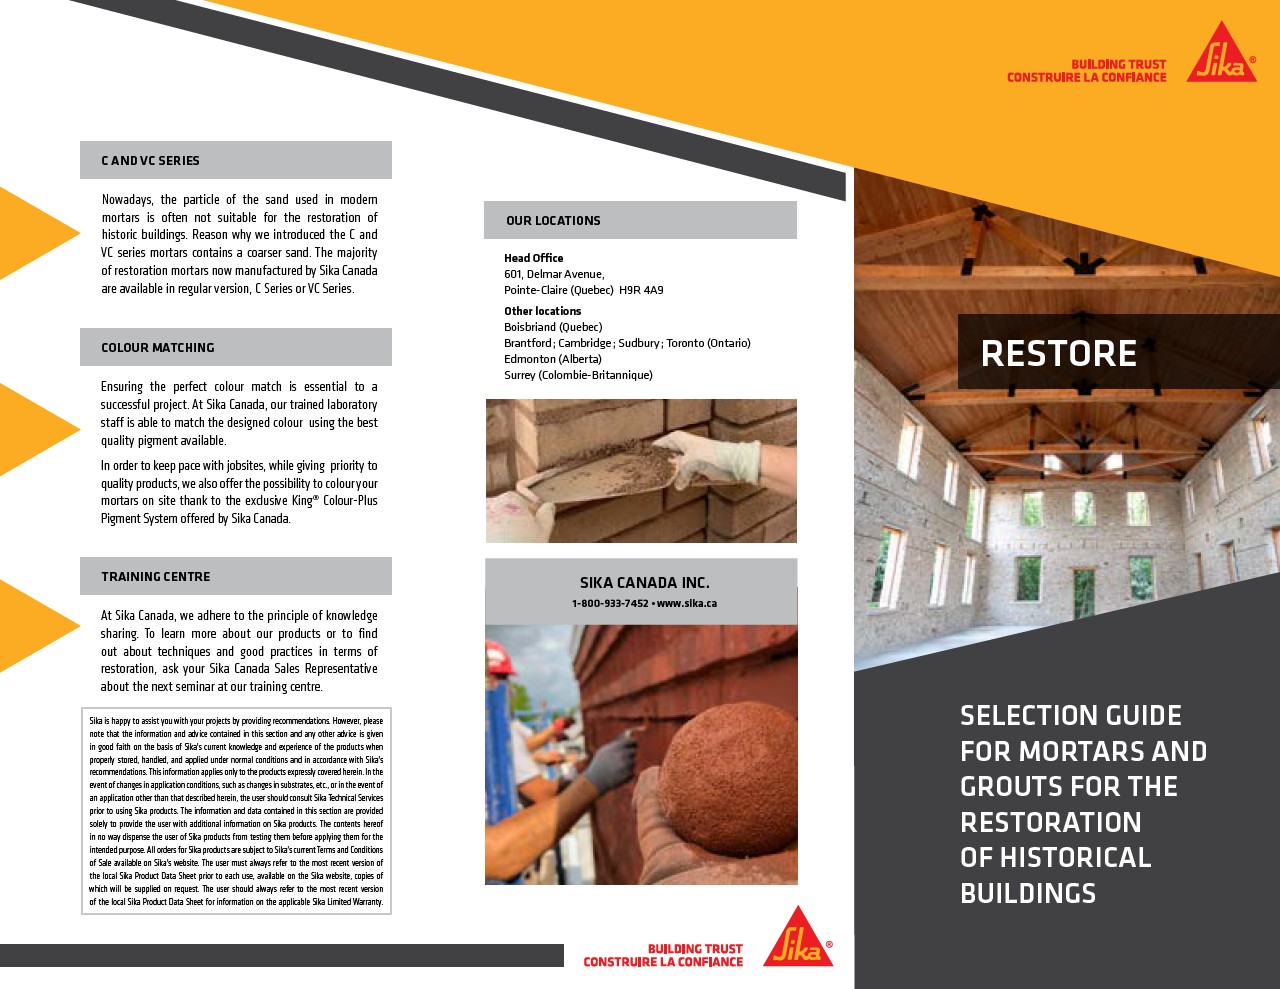 Historical building restoration selection guide